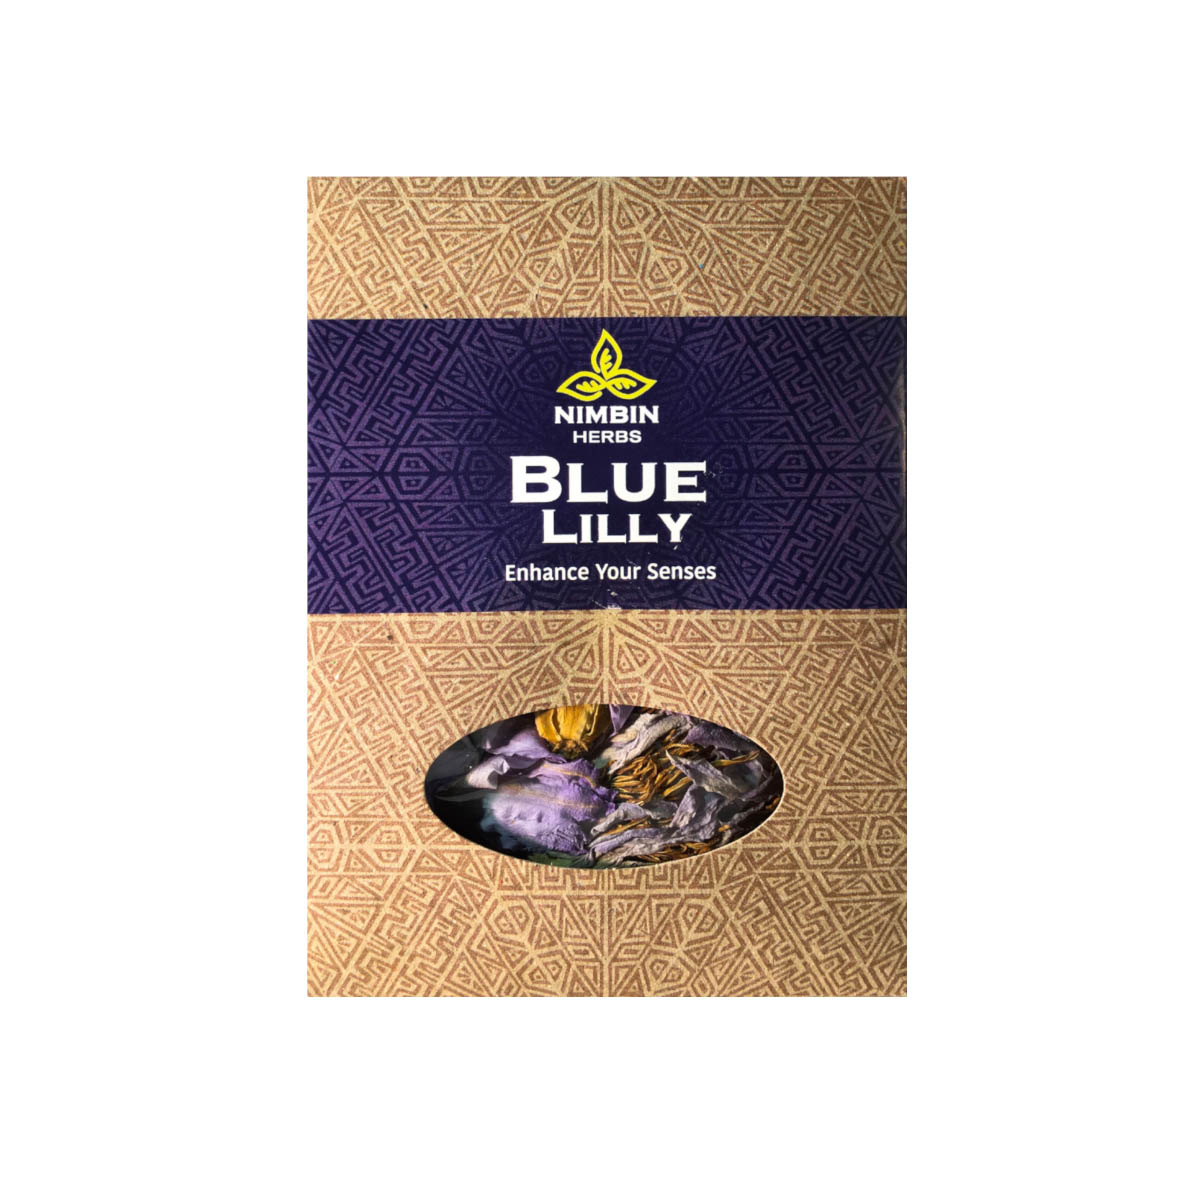 Blue-Lilly-FINAL.jpg